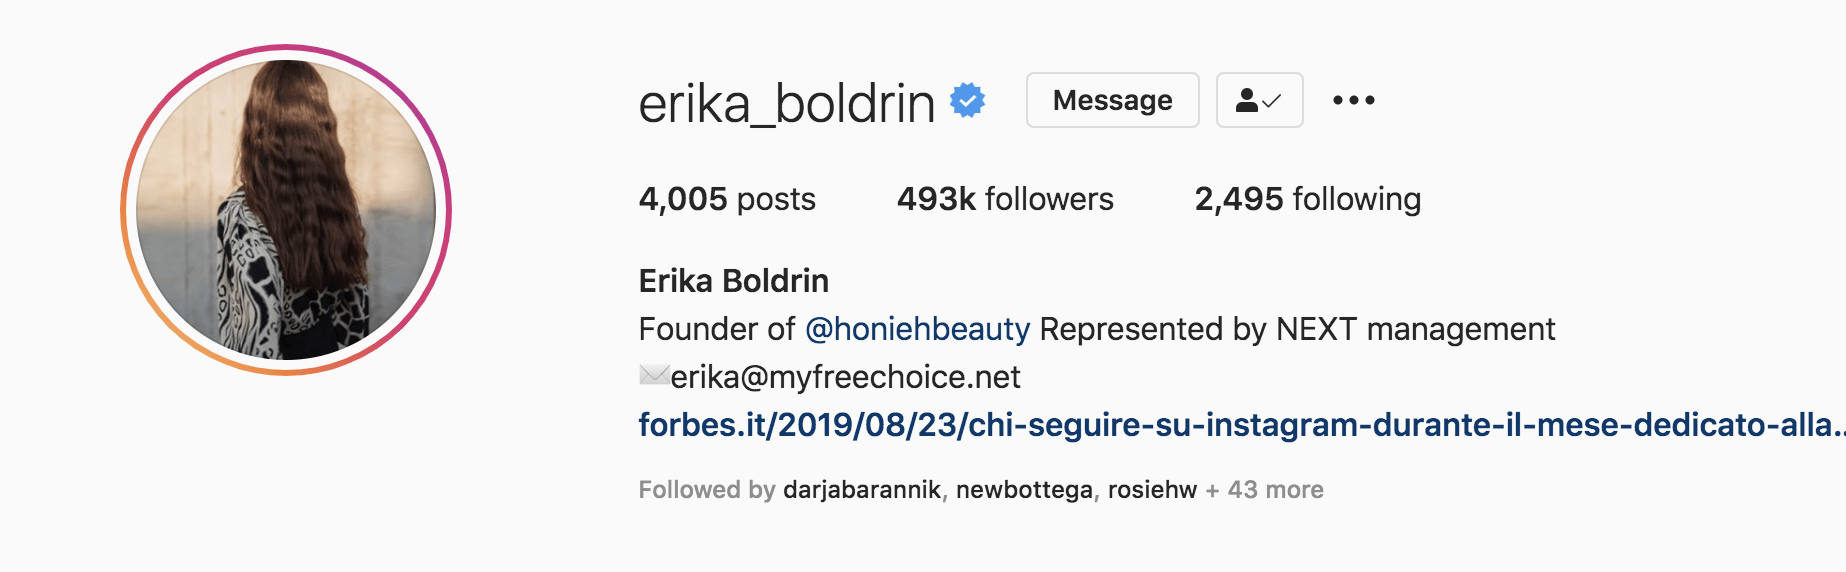 Top Fashion Influencers - Erika Boldrin